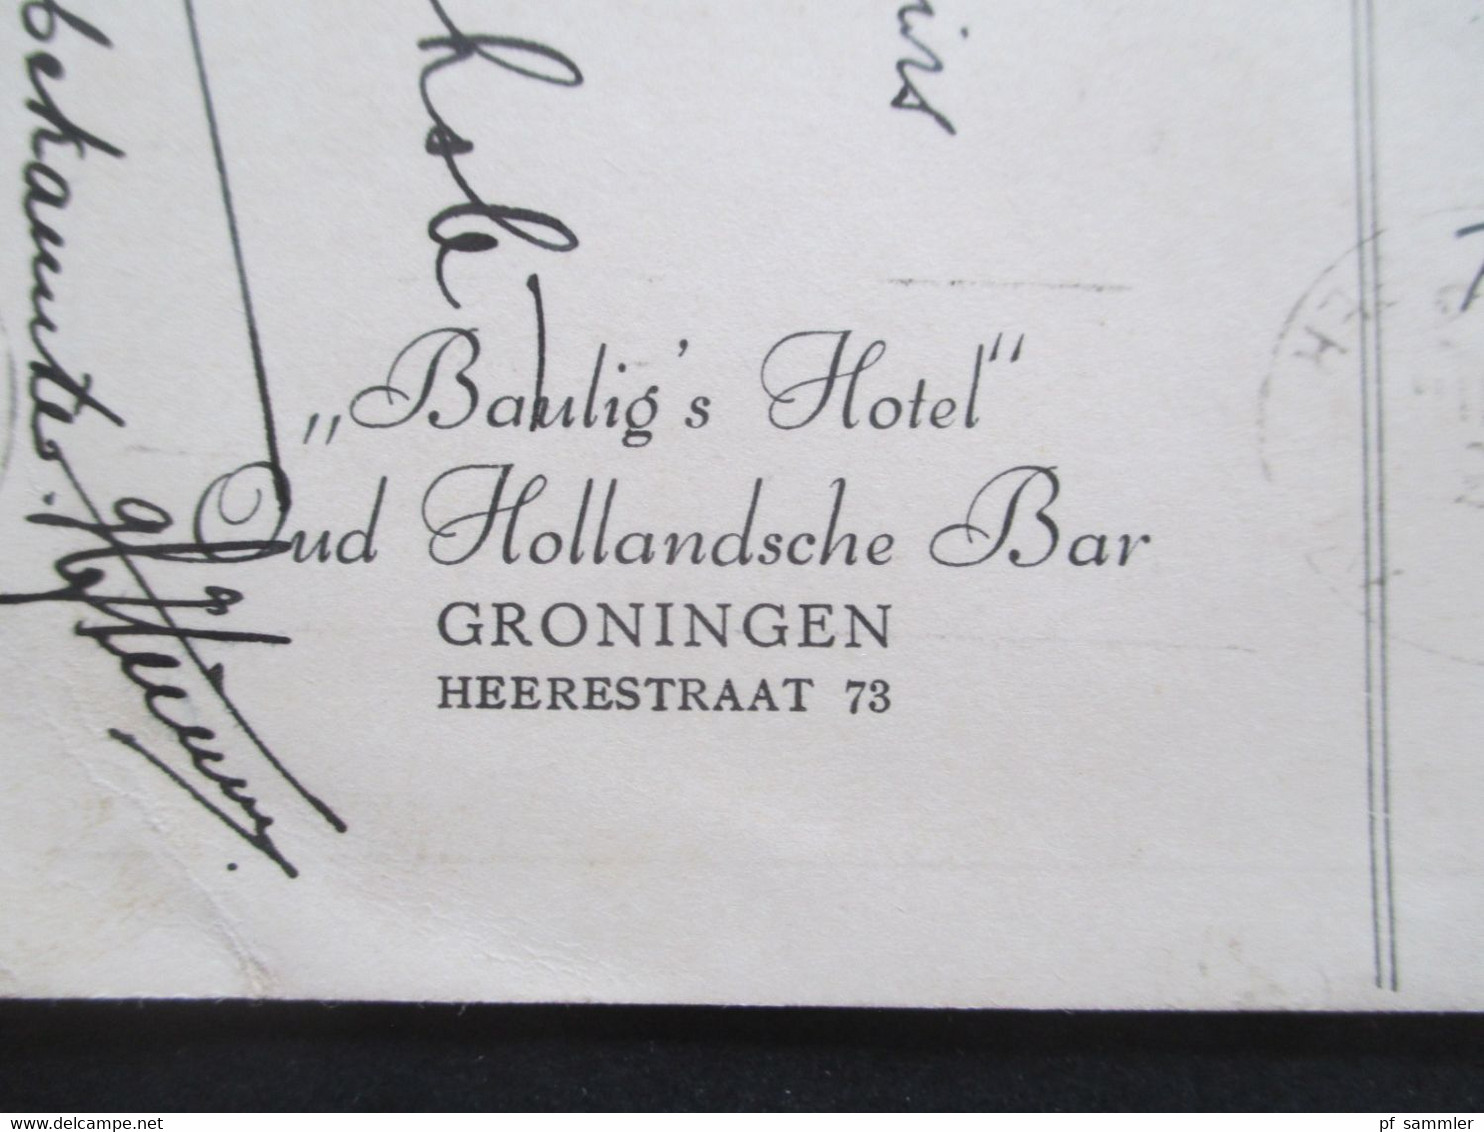 Niederlande 1939 AK Bist Du Traurig Geh Zu Baulig. Bist Du Froh Tuh Ebenso. Baulig's Hotel Oud Hollandsche Bar Groningen - Hotels & Restaurants